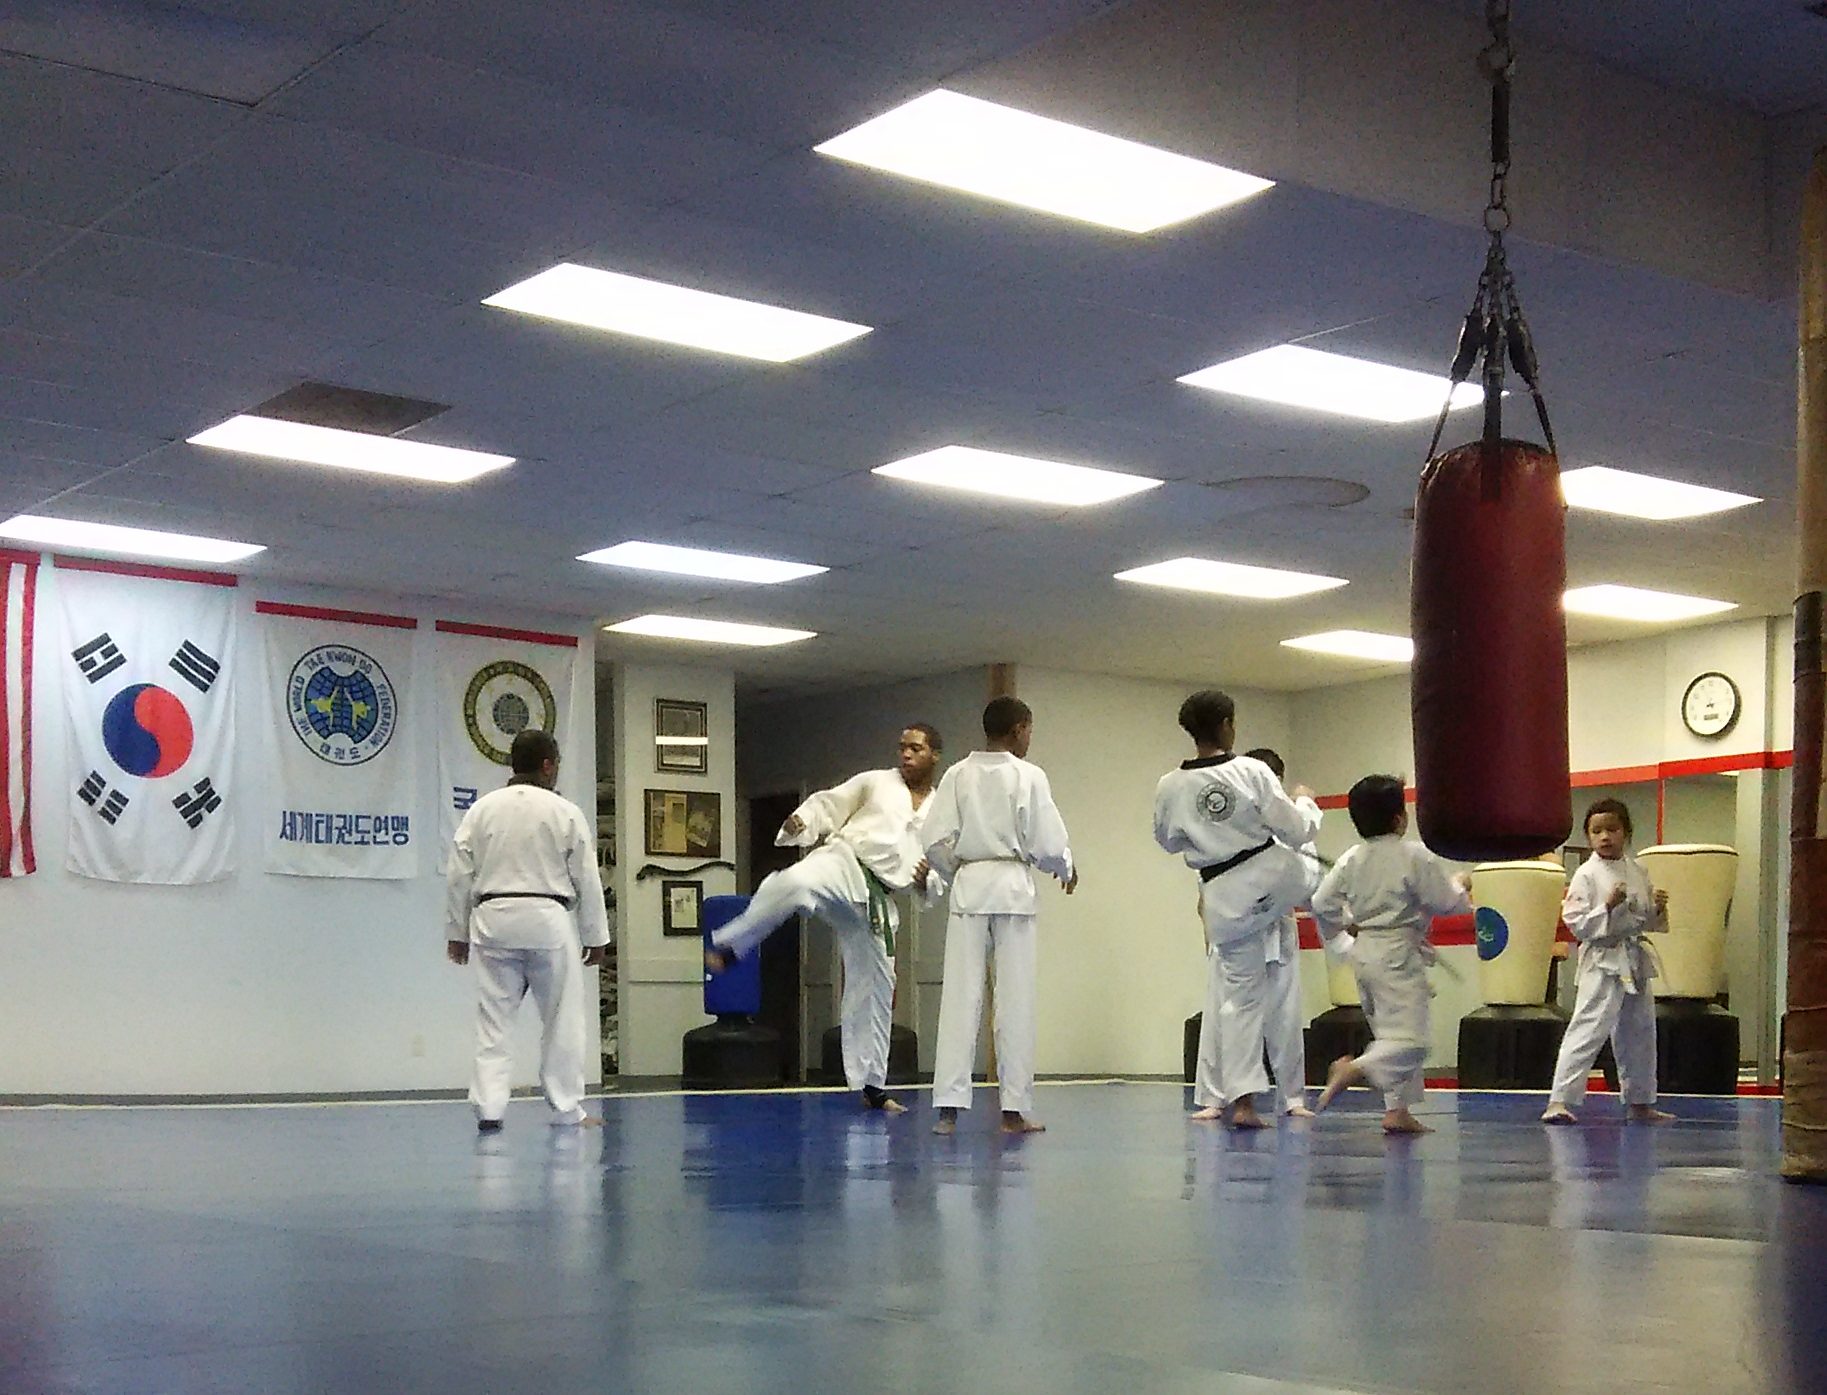 Dallas Taekwondo Center ⋆ Learn More Than SelfDefense